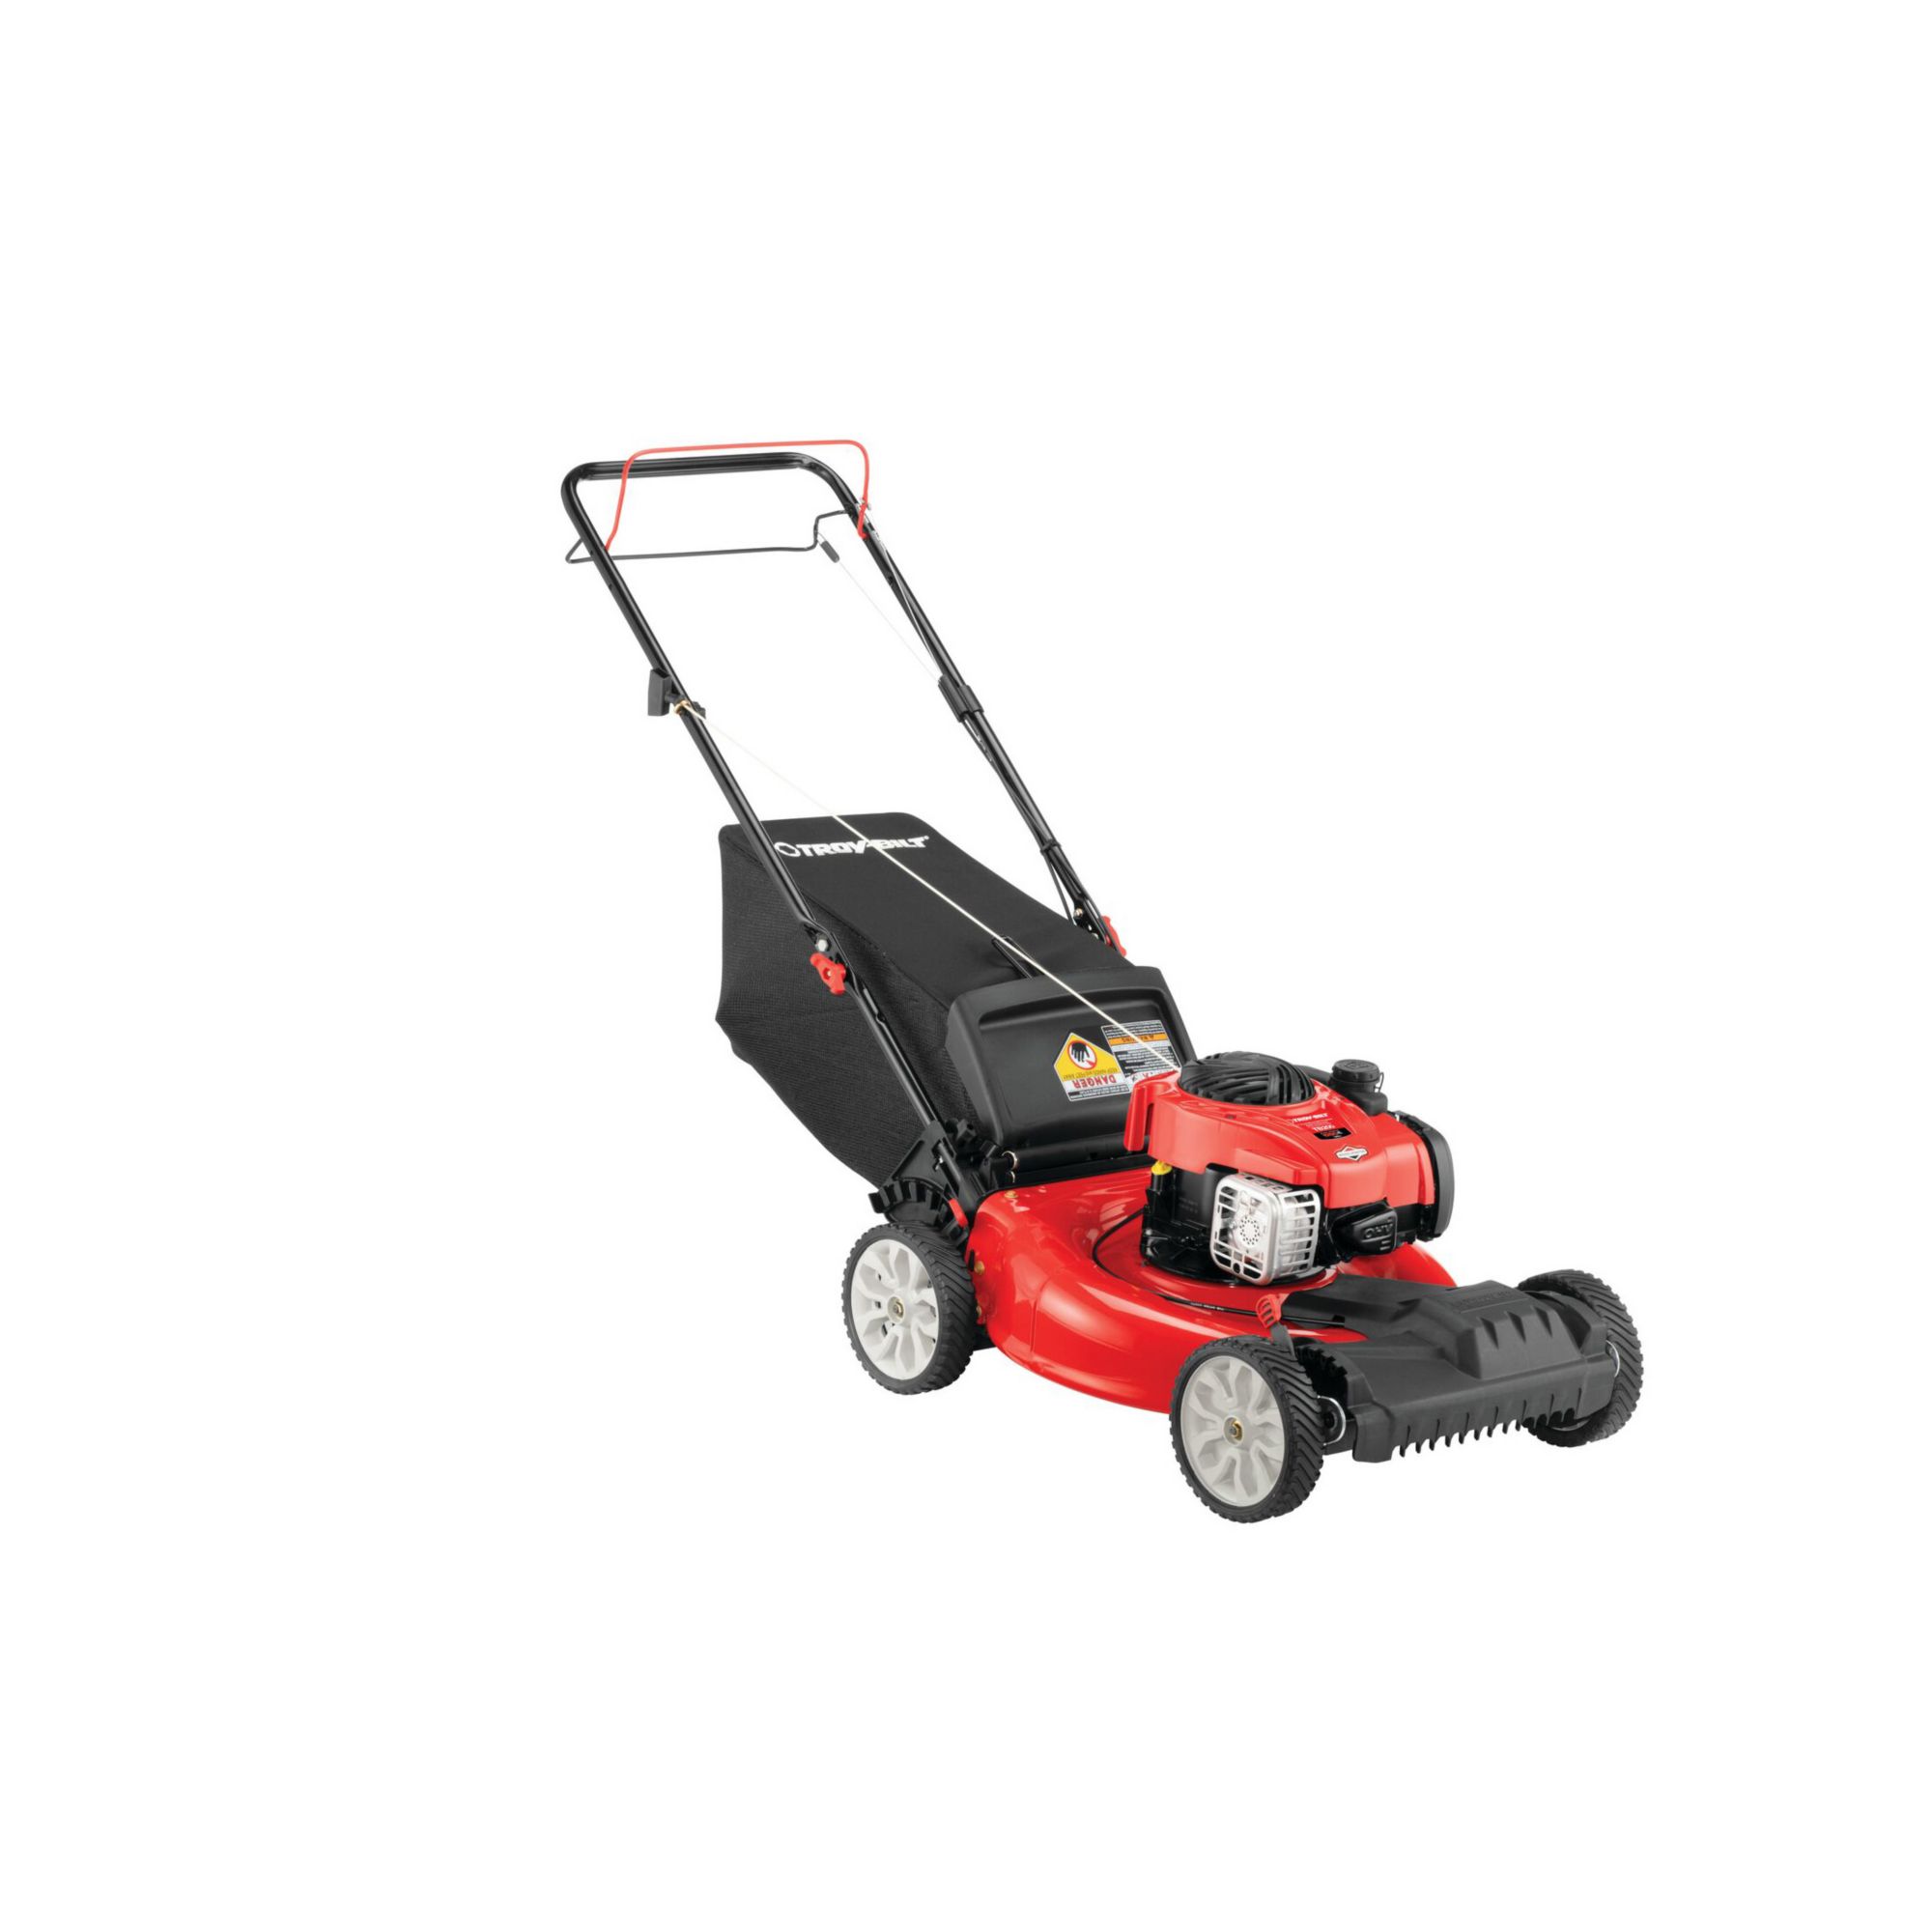 Troy-Bilt 21 in. 140cc Gas-Powered 2-in-1 Push Lawn Mower